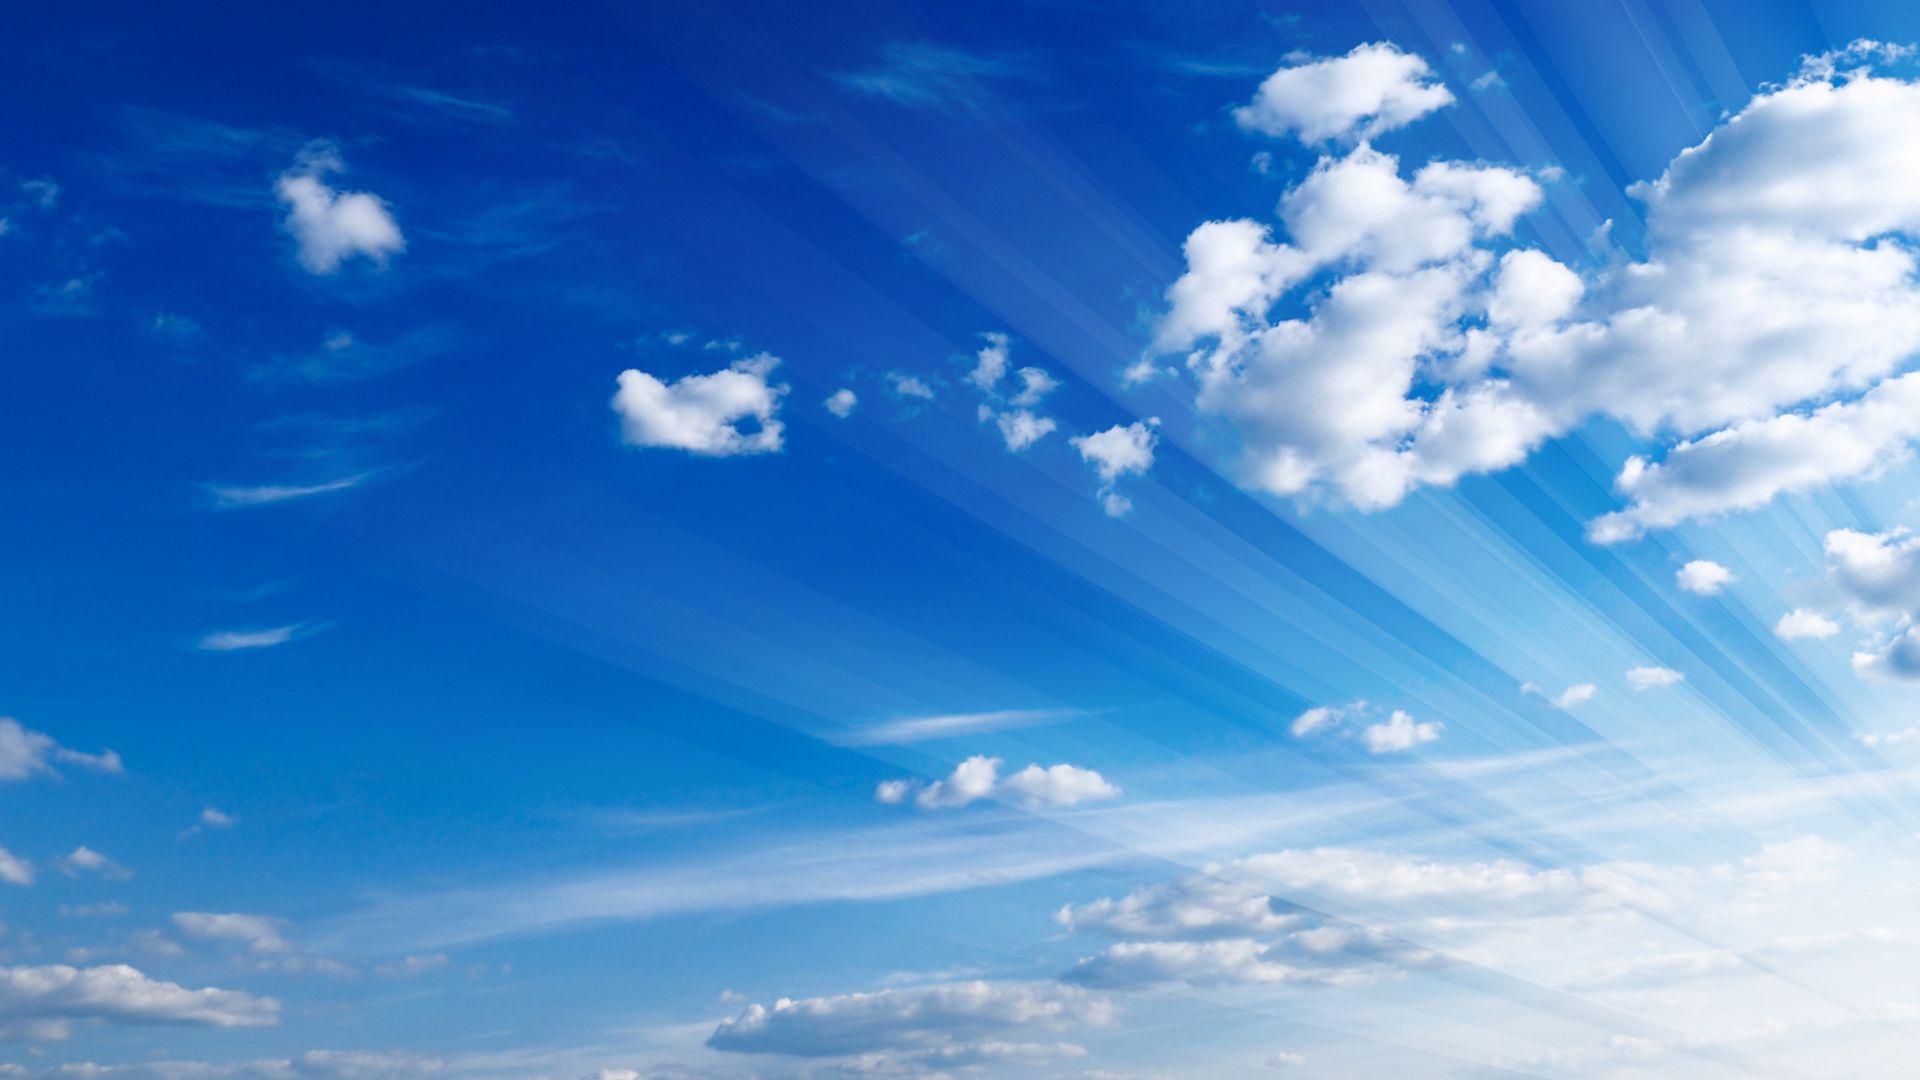 облака, 5k, 4k, 8k, голубое небо, clouds, 5k, 4k wallpaper, 8k, silver lining, blue sky (horizontal)